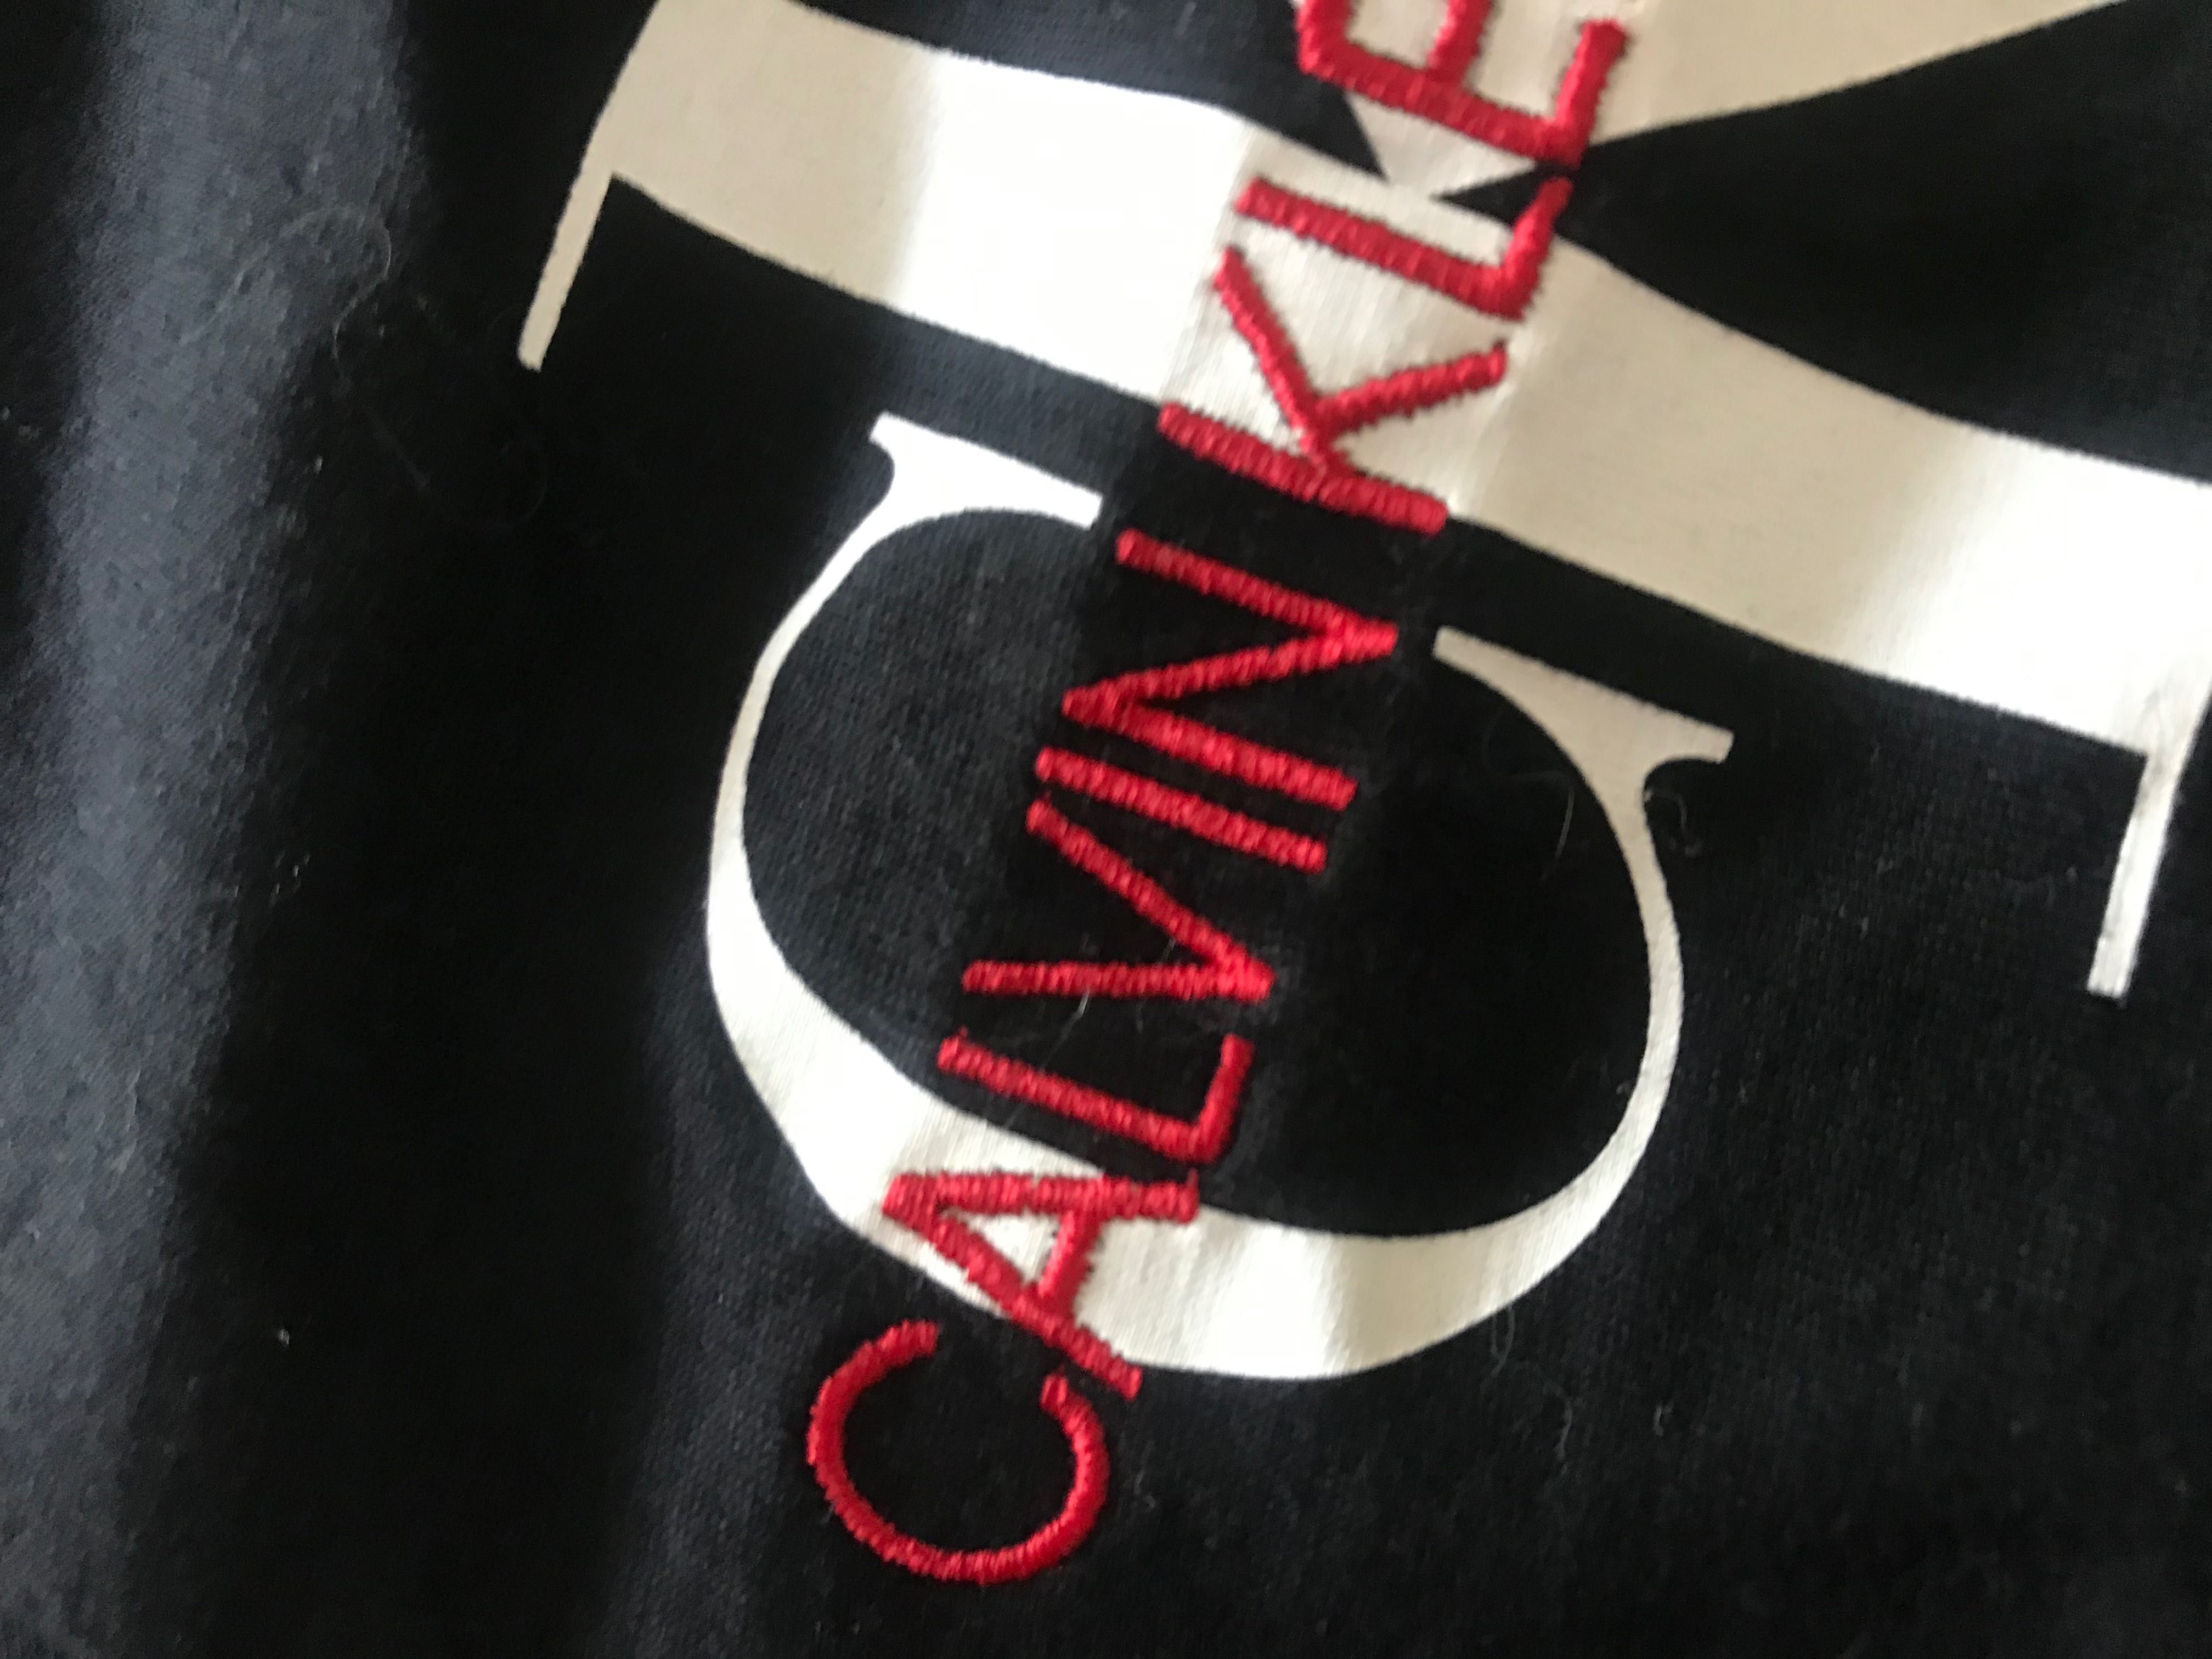 Calvin Klein tshirt bluzka nowy